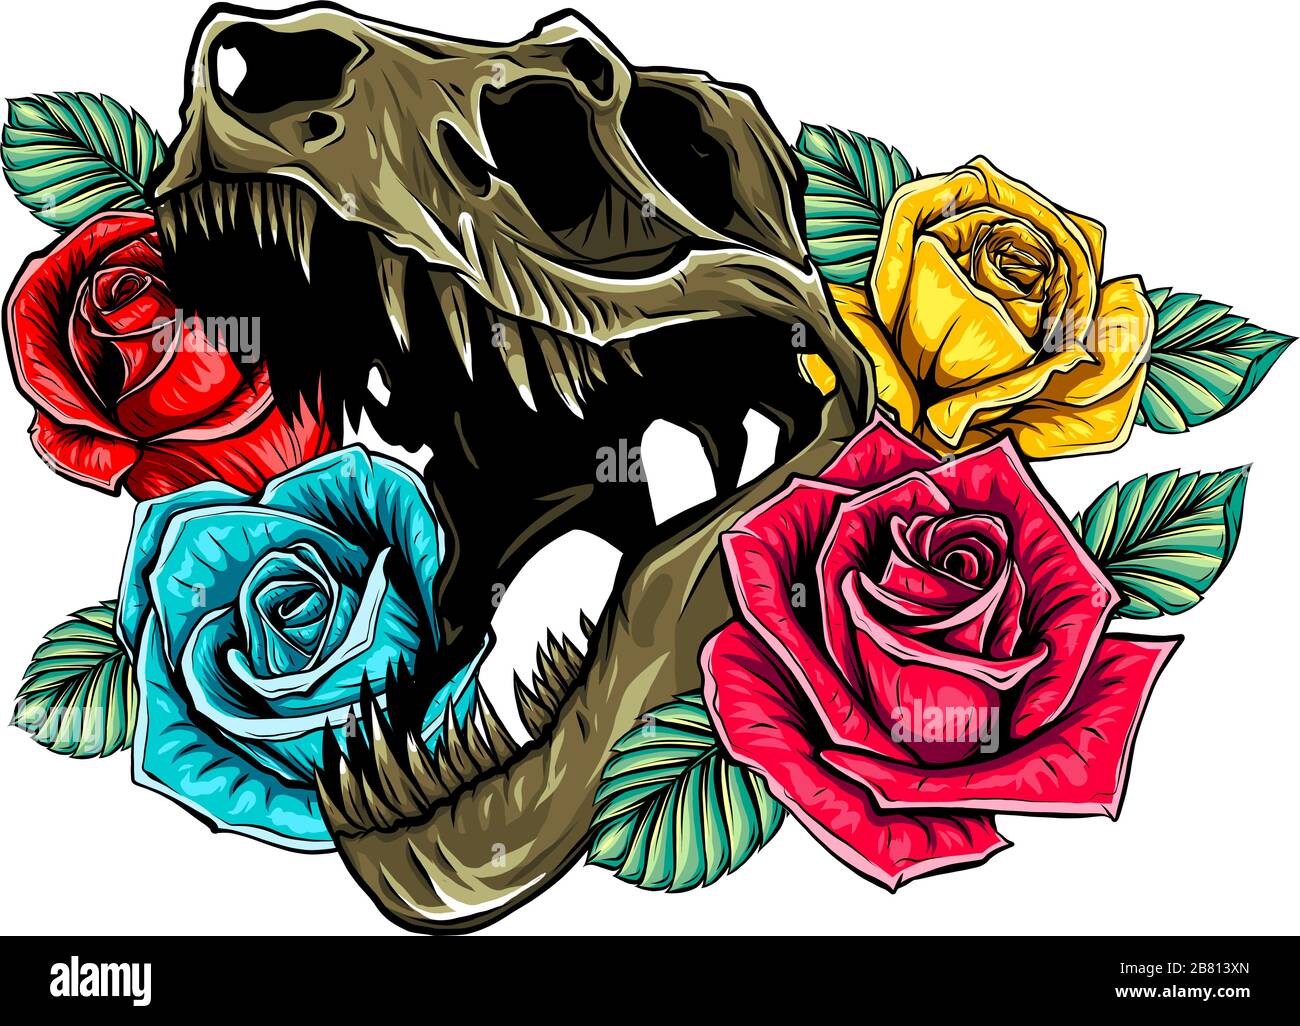 Tyrannosaurus Skull with roses Vector illustration design Tattoo Stock Vector